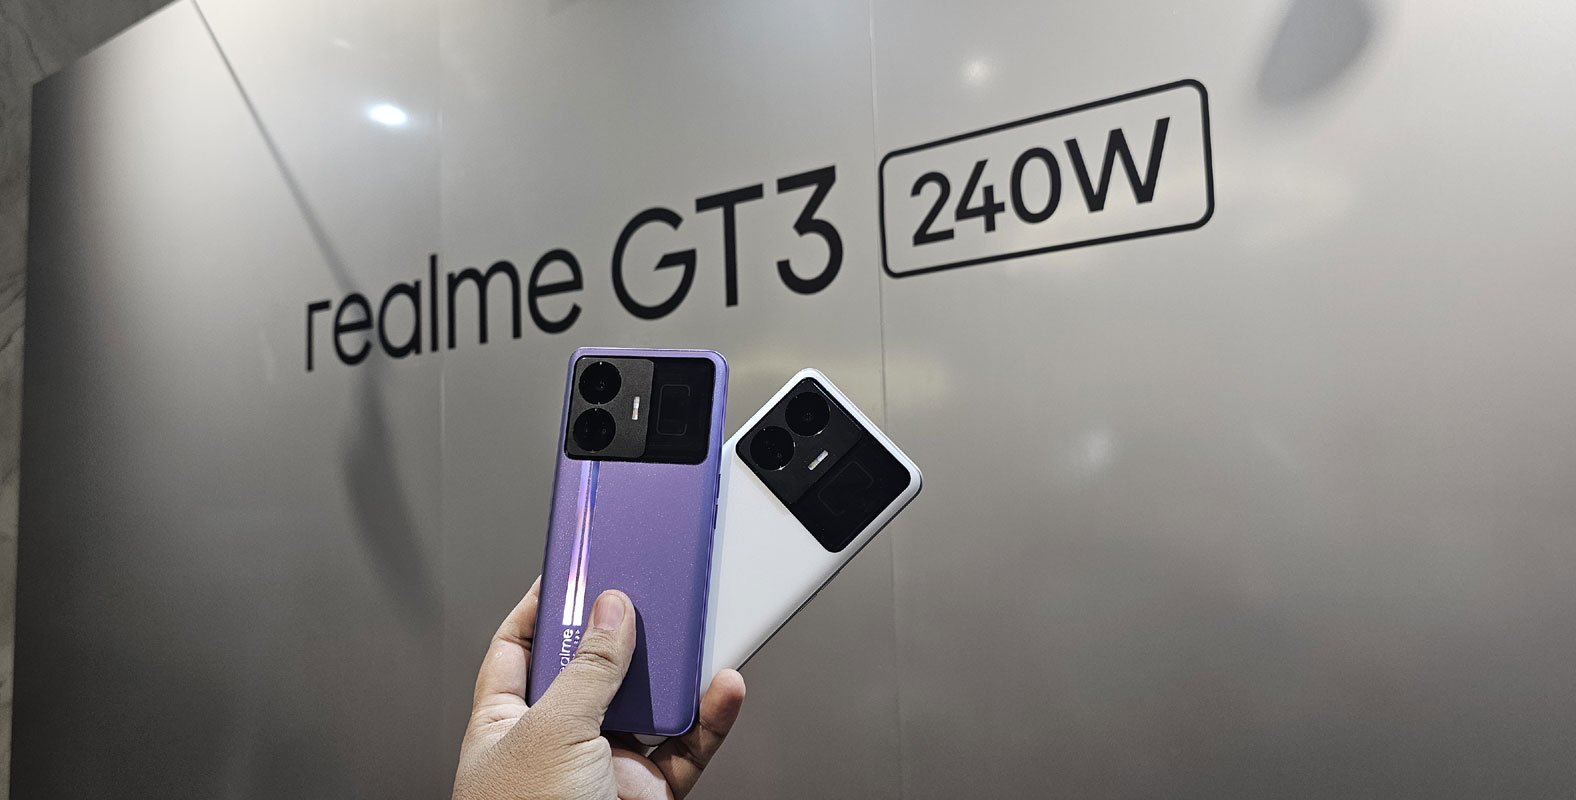 realme GT 3 - Snapdragon 8+ Gen 1, up to 1TB of storage, 144Hz